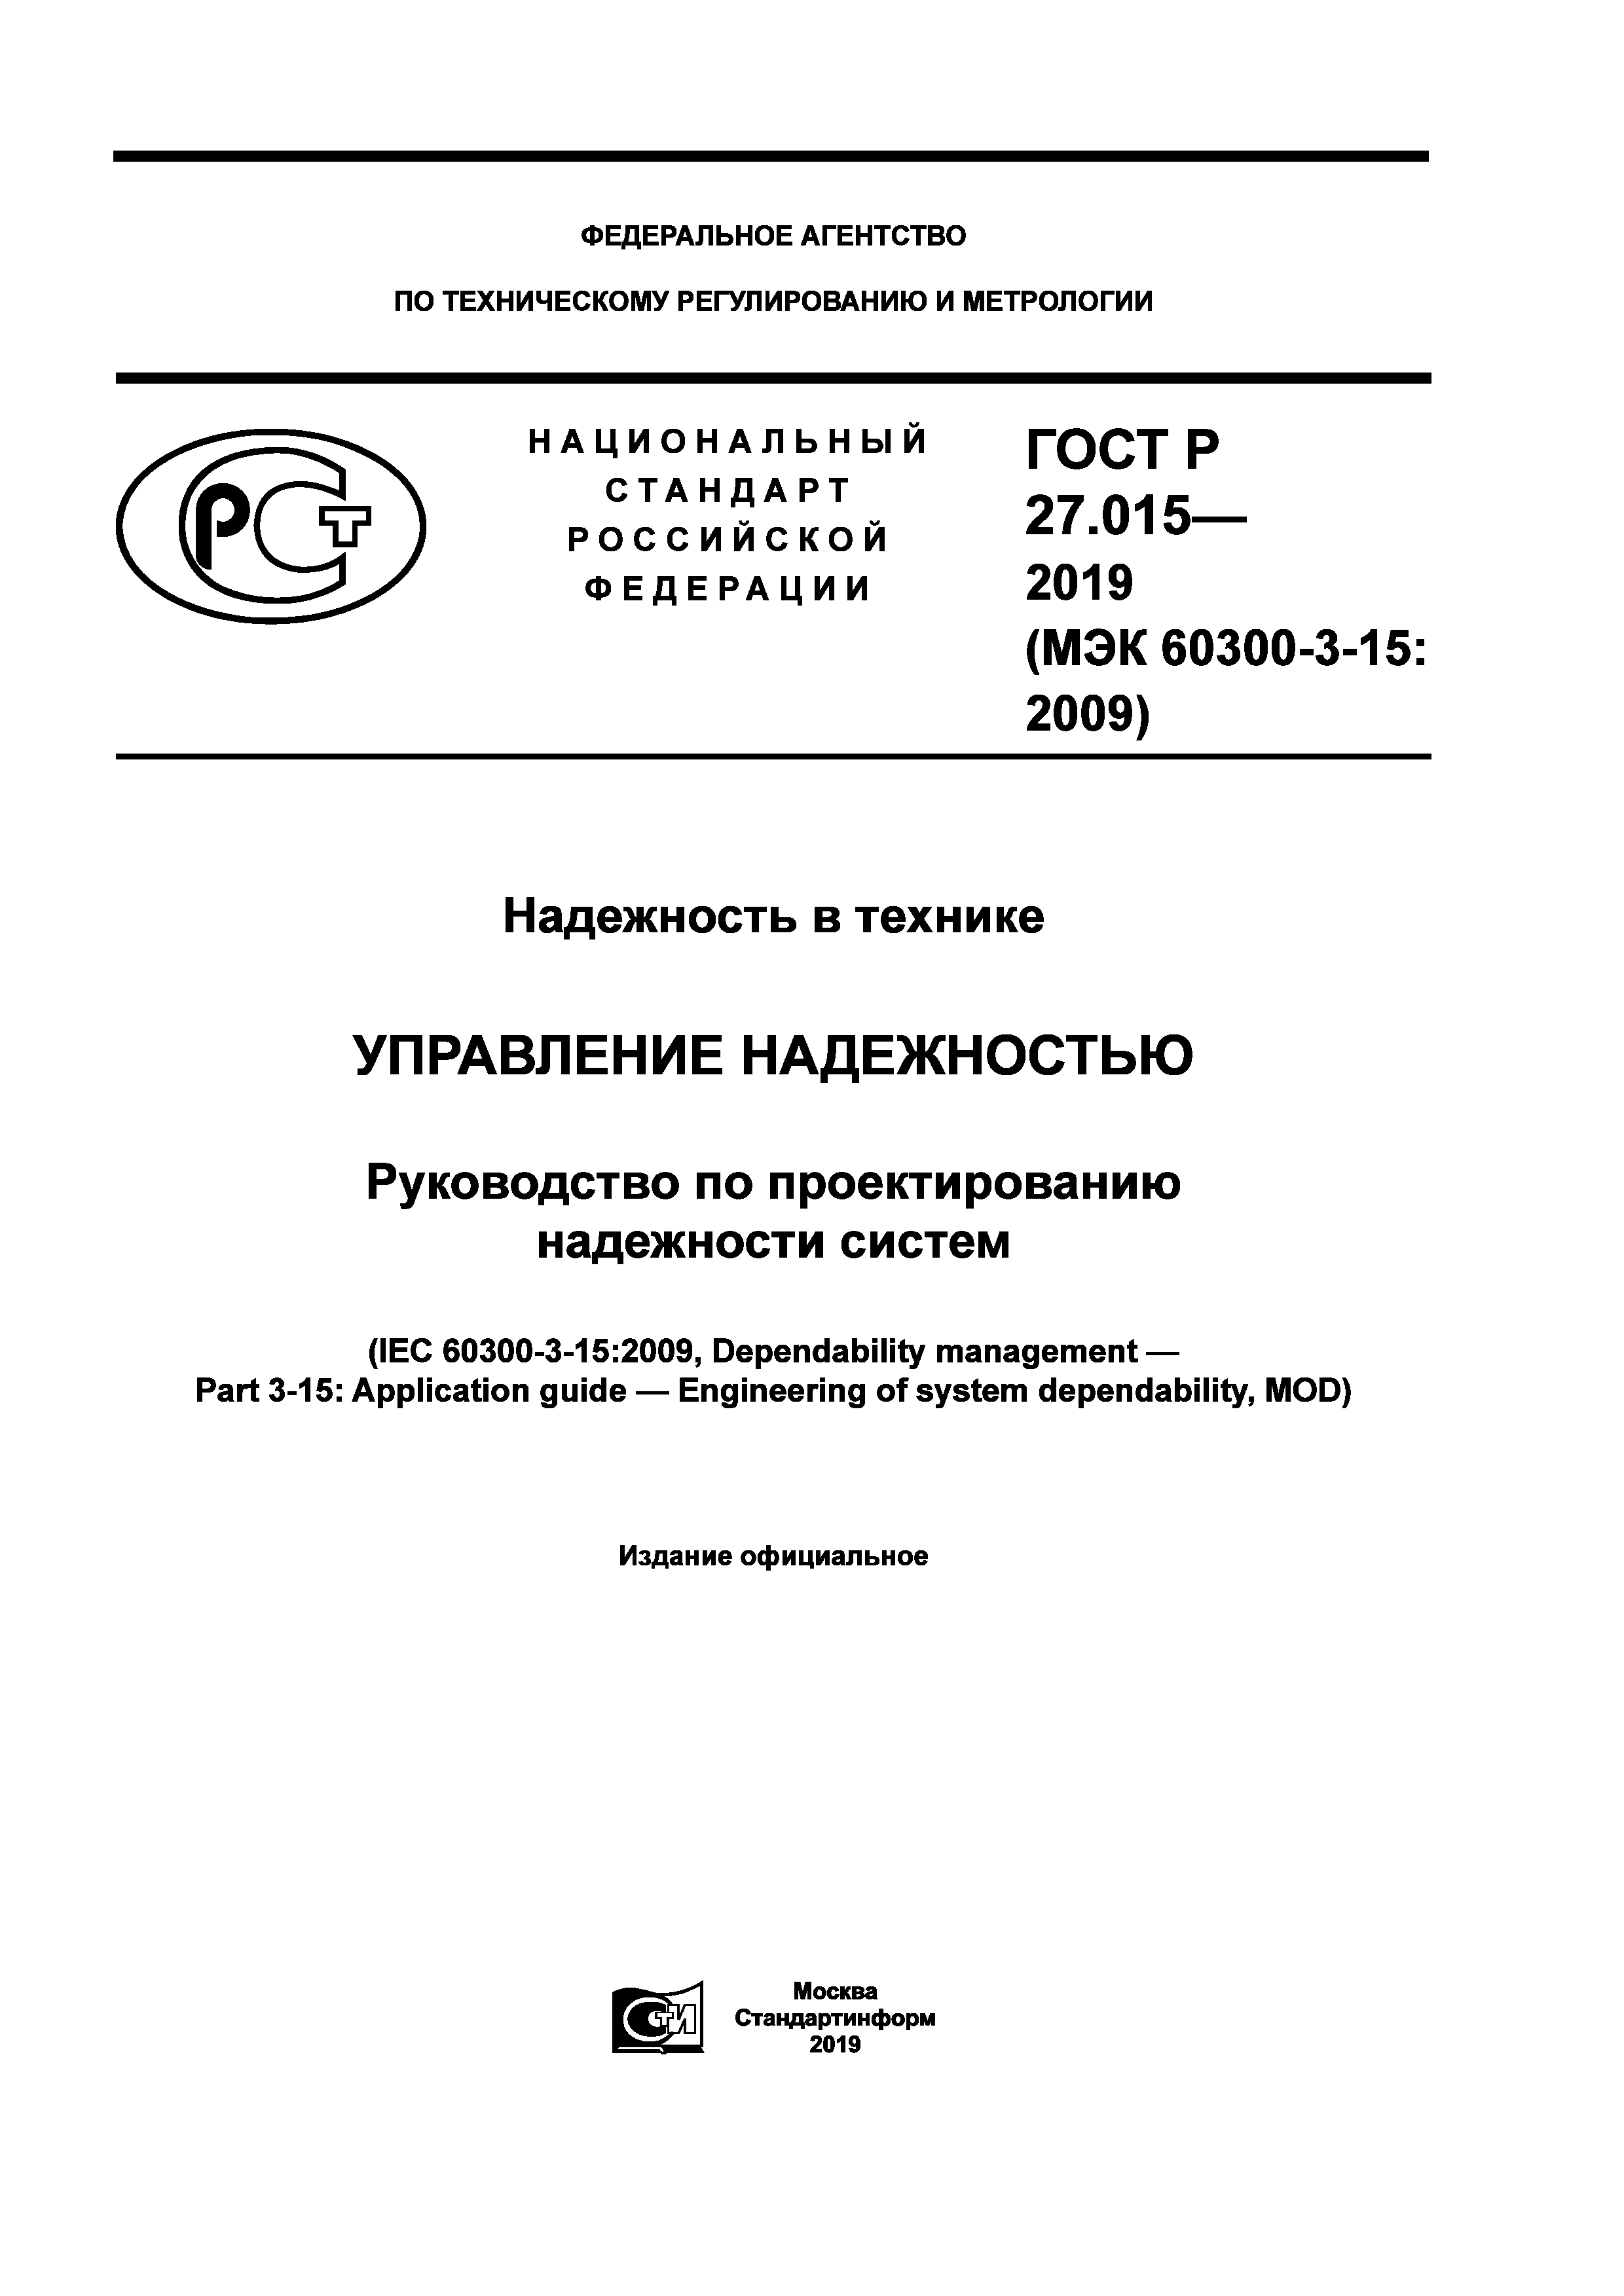 ГОСТ Р 27.015-2019